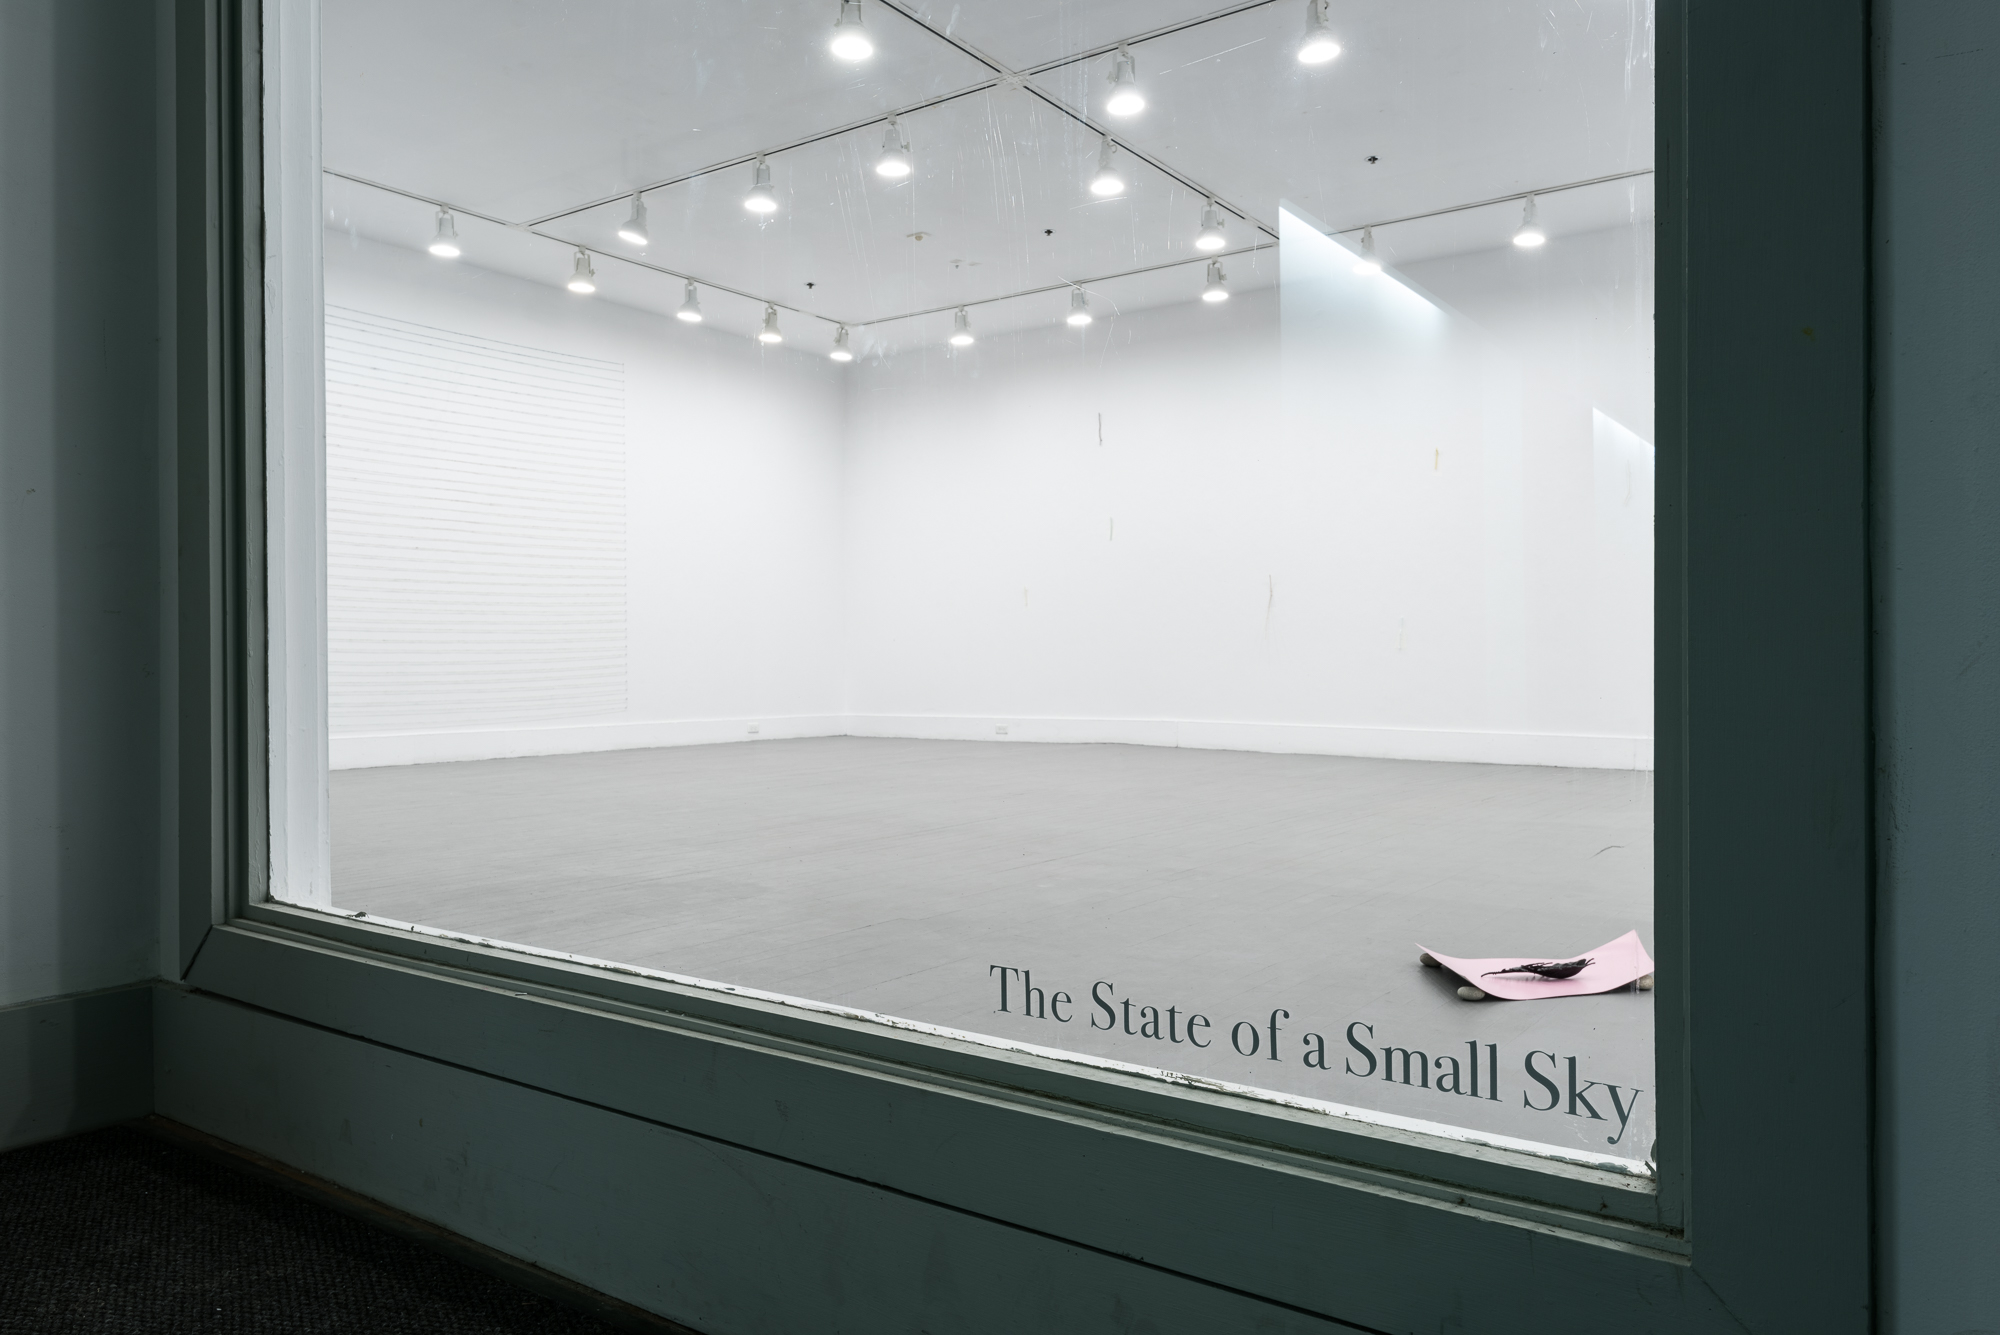   The State of a Small Sky , Zavitiz Gallery, 2016  Documentation by Peter Denton 